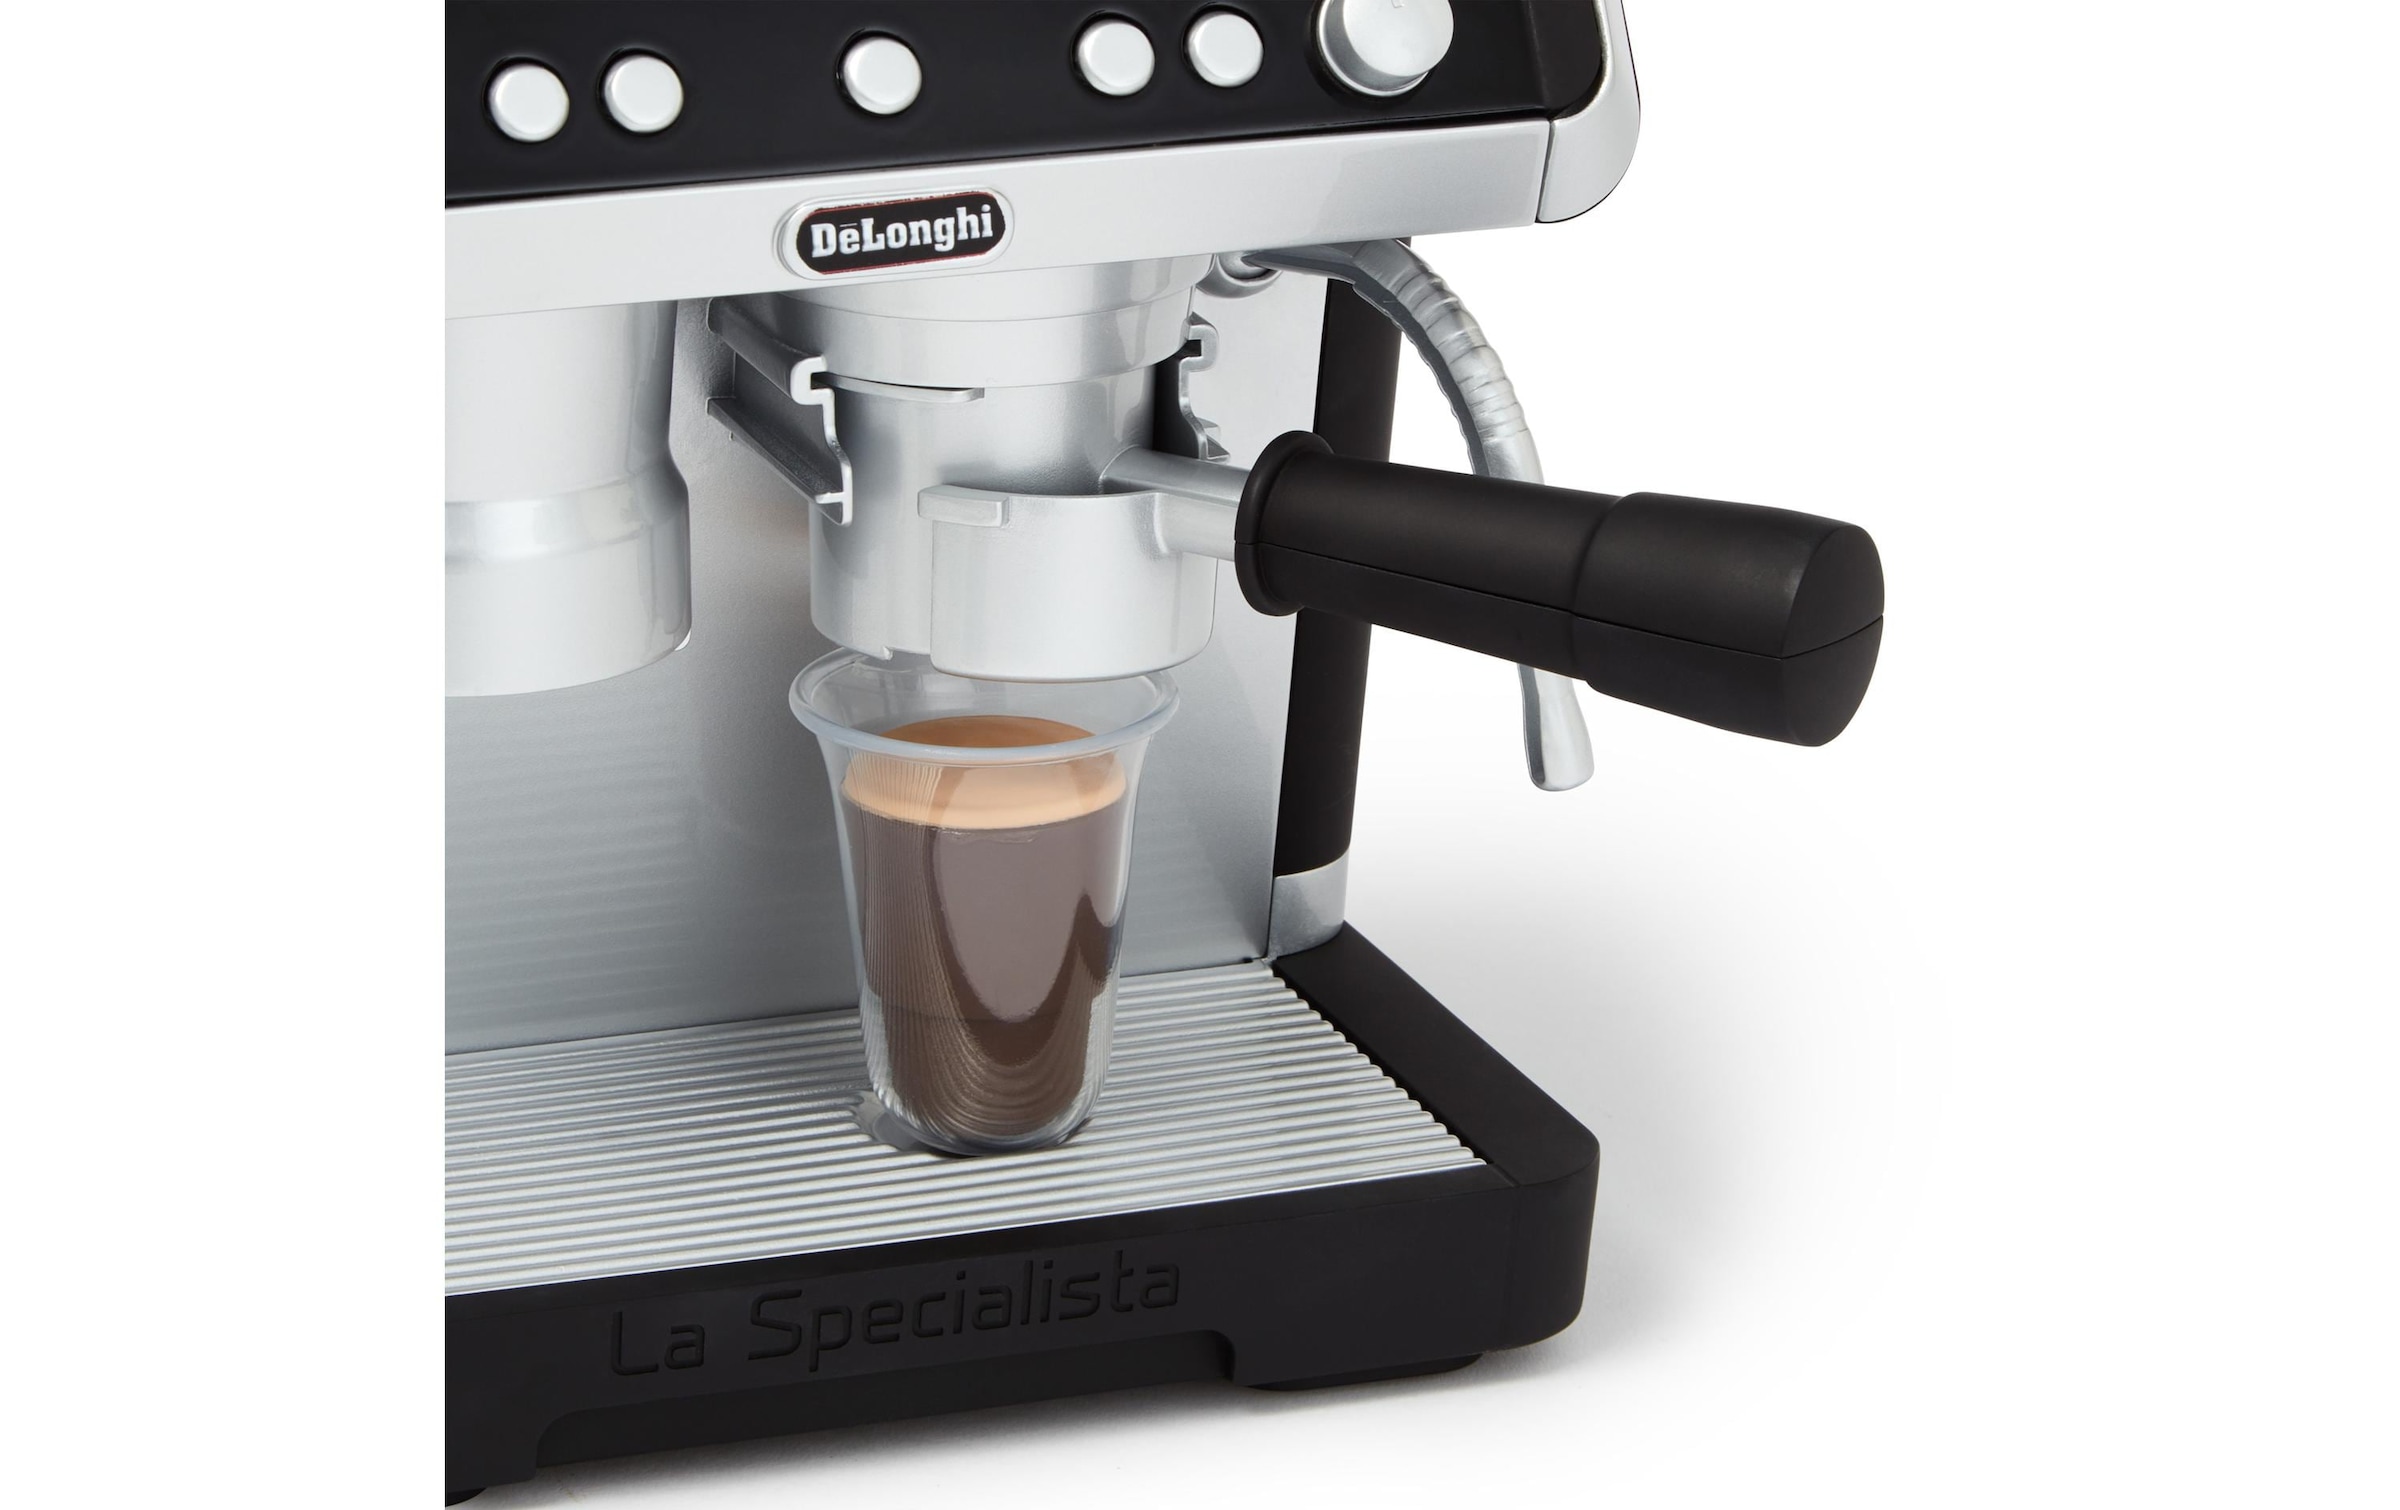 Casdon Kinder-Haushaltsset »DeLonghi Kaffeemaschine«